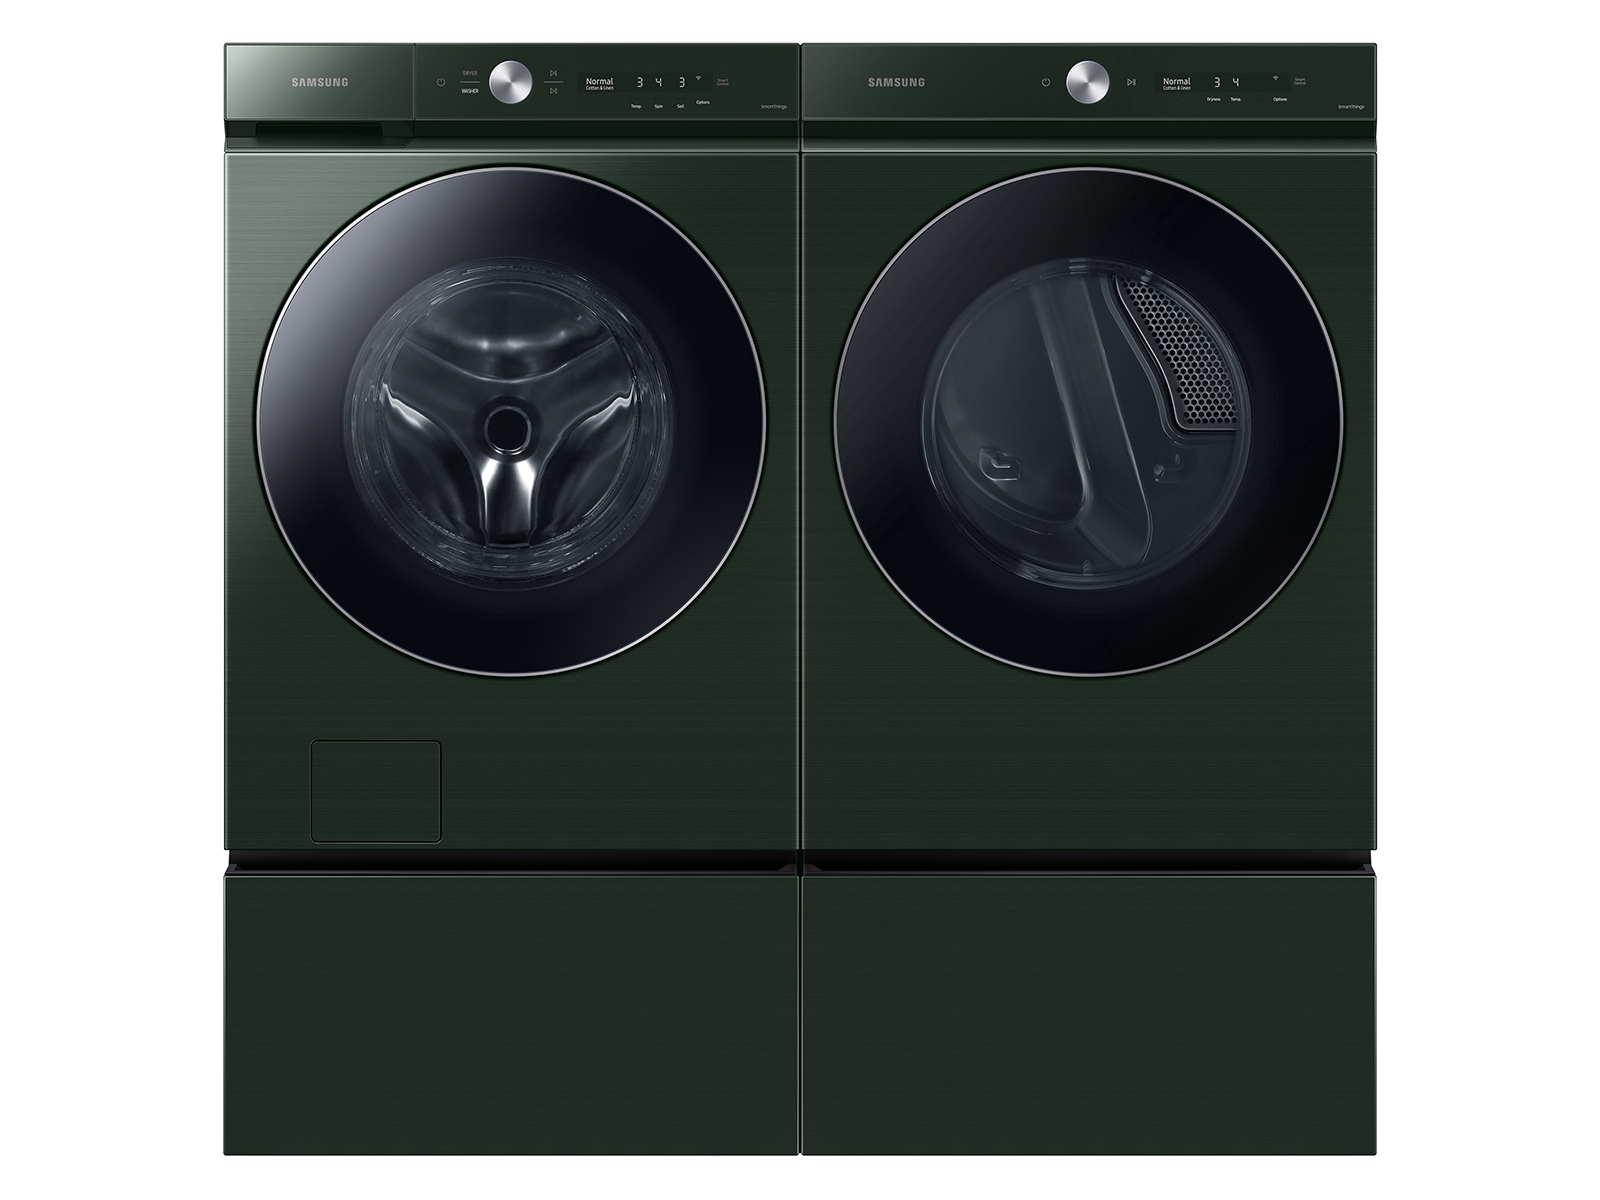 Samsung - 27 Washer/Dryer Laundry Pedestal - Black stainless steel